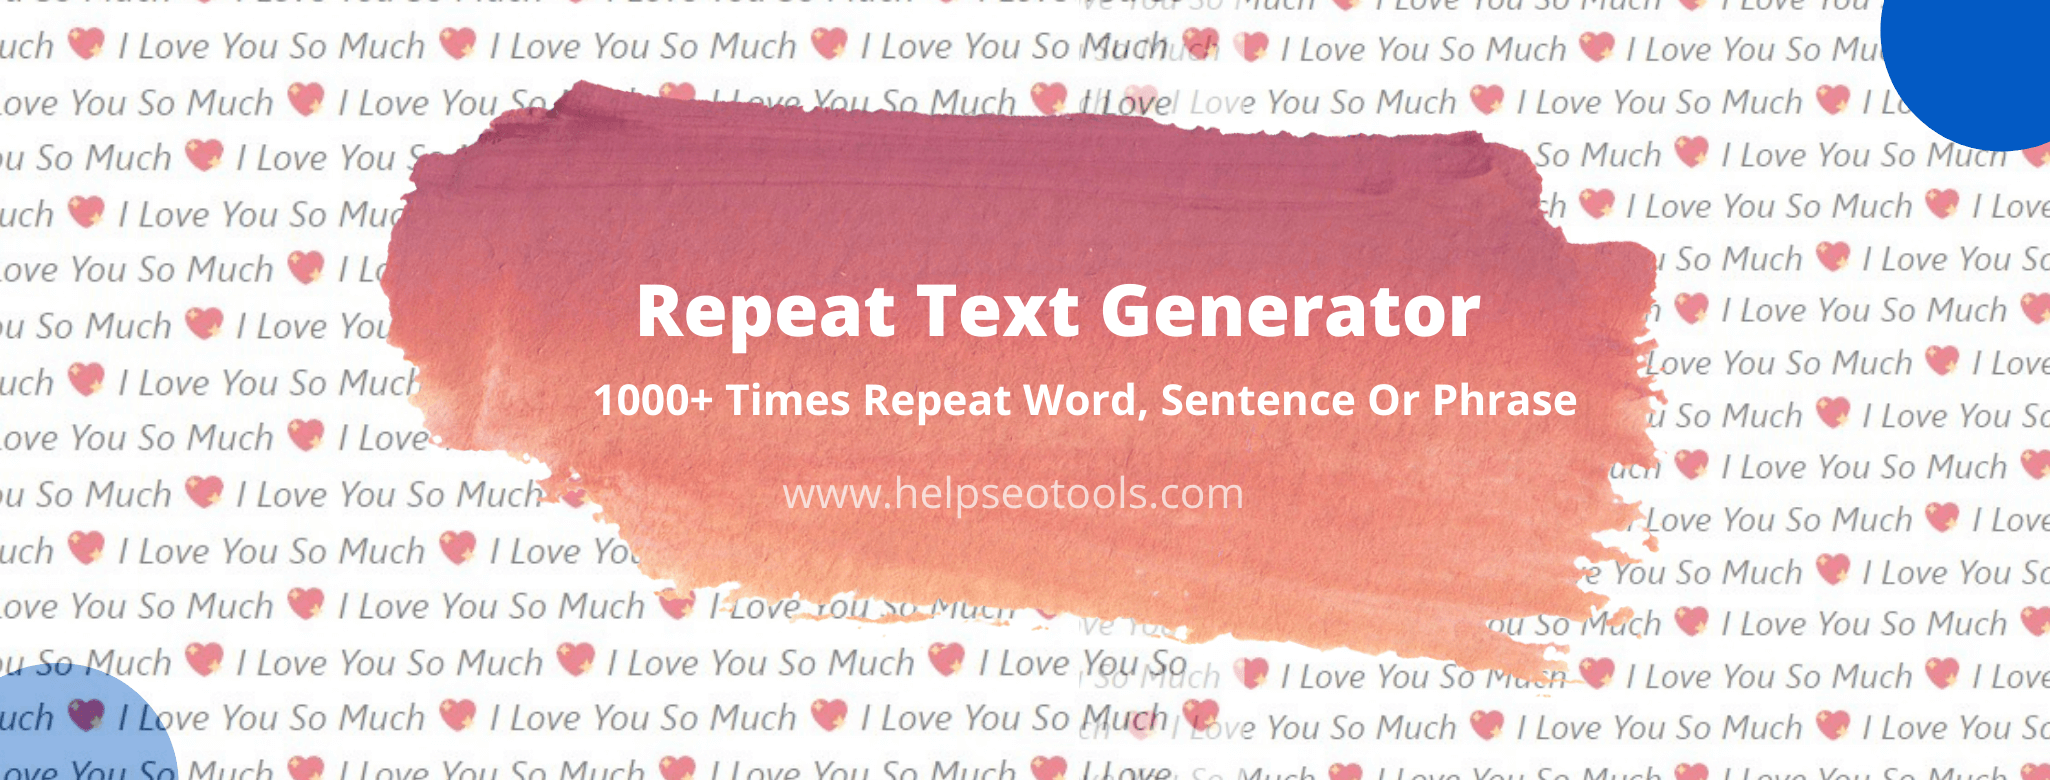 Free Repeat Text Generator Online Tool